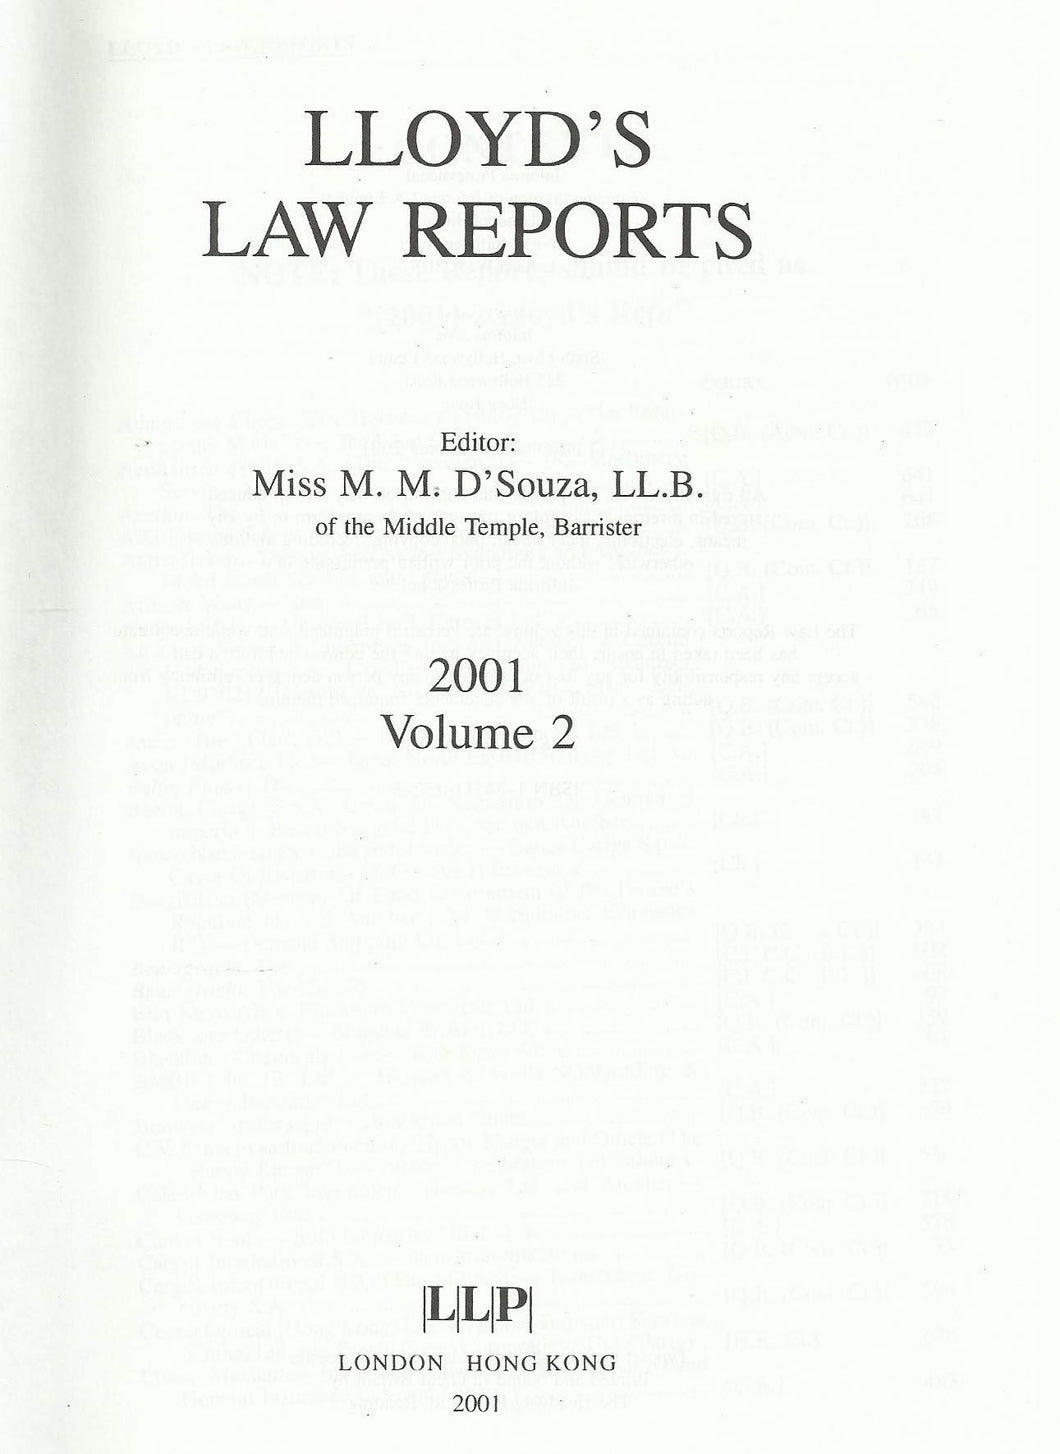 Lloyd's Law Reports: 2001 Vol 2